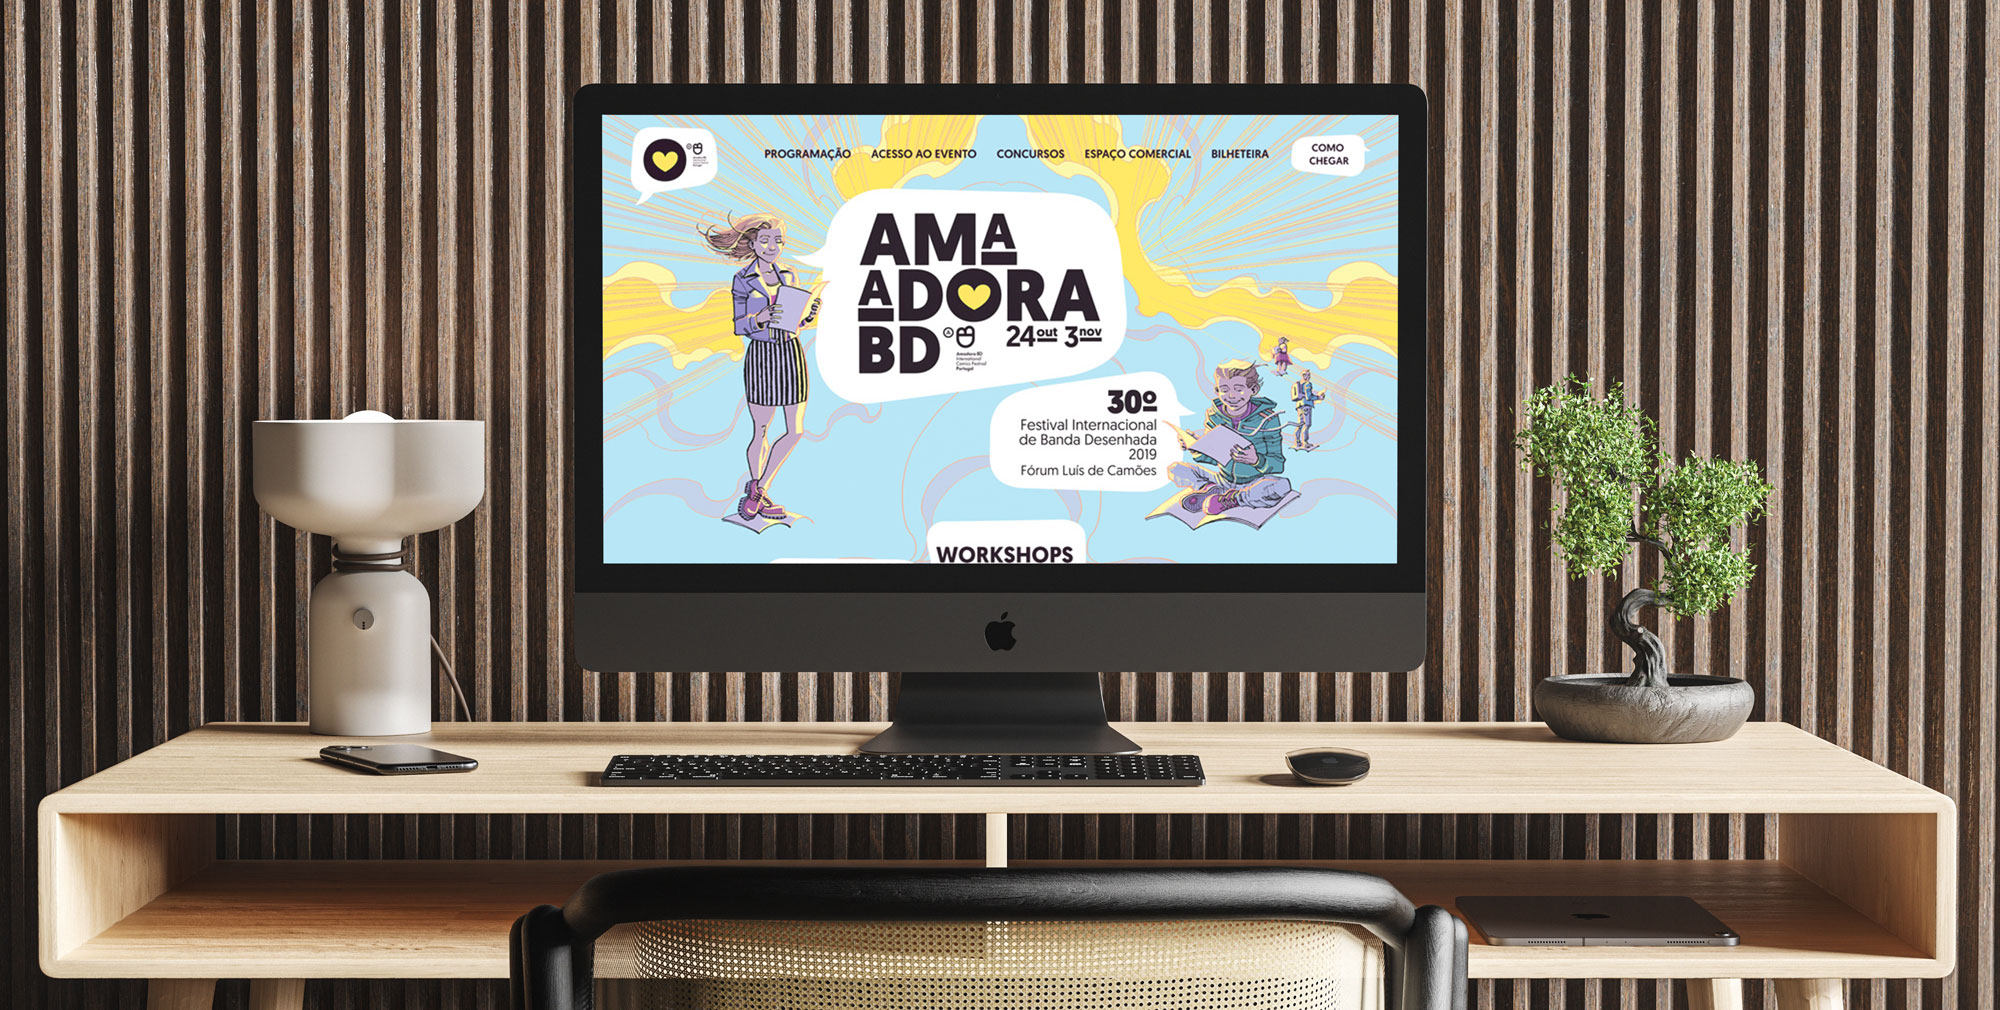 Mac Computer on a desk showing Amadora BD website